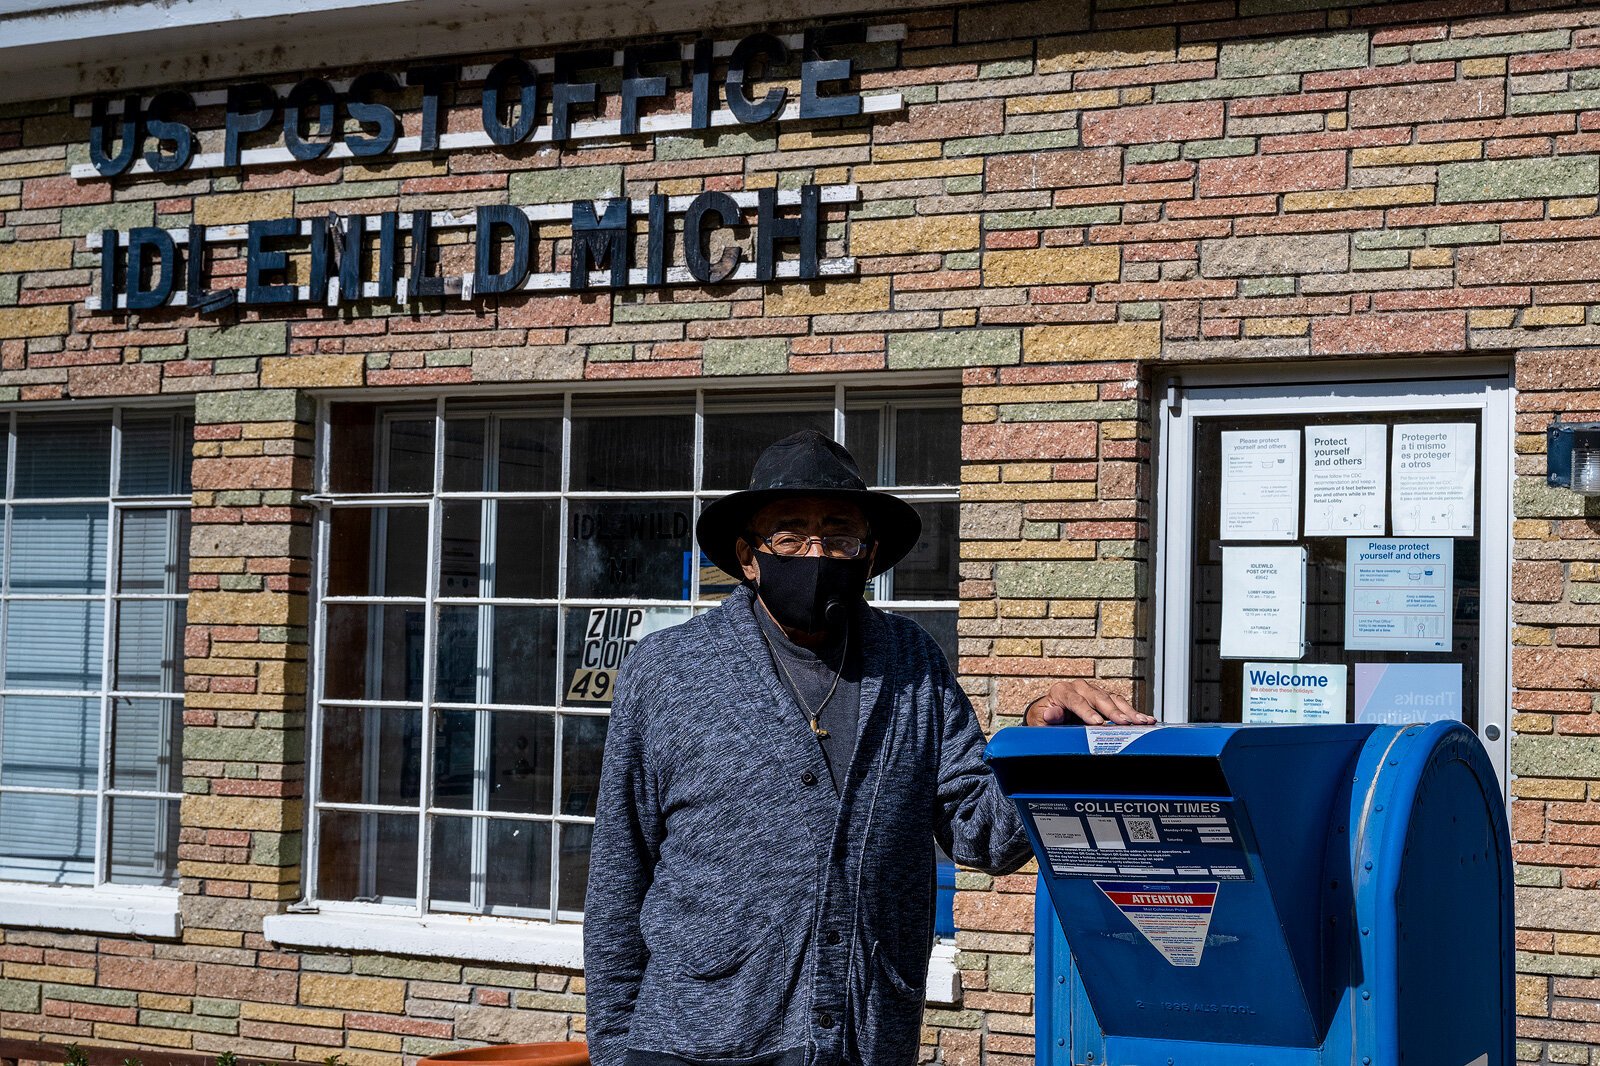 Restoring Idlewild, Michigan, historic vacation spot for Black people